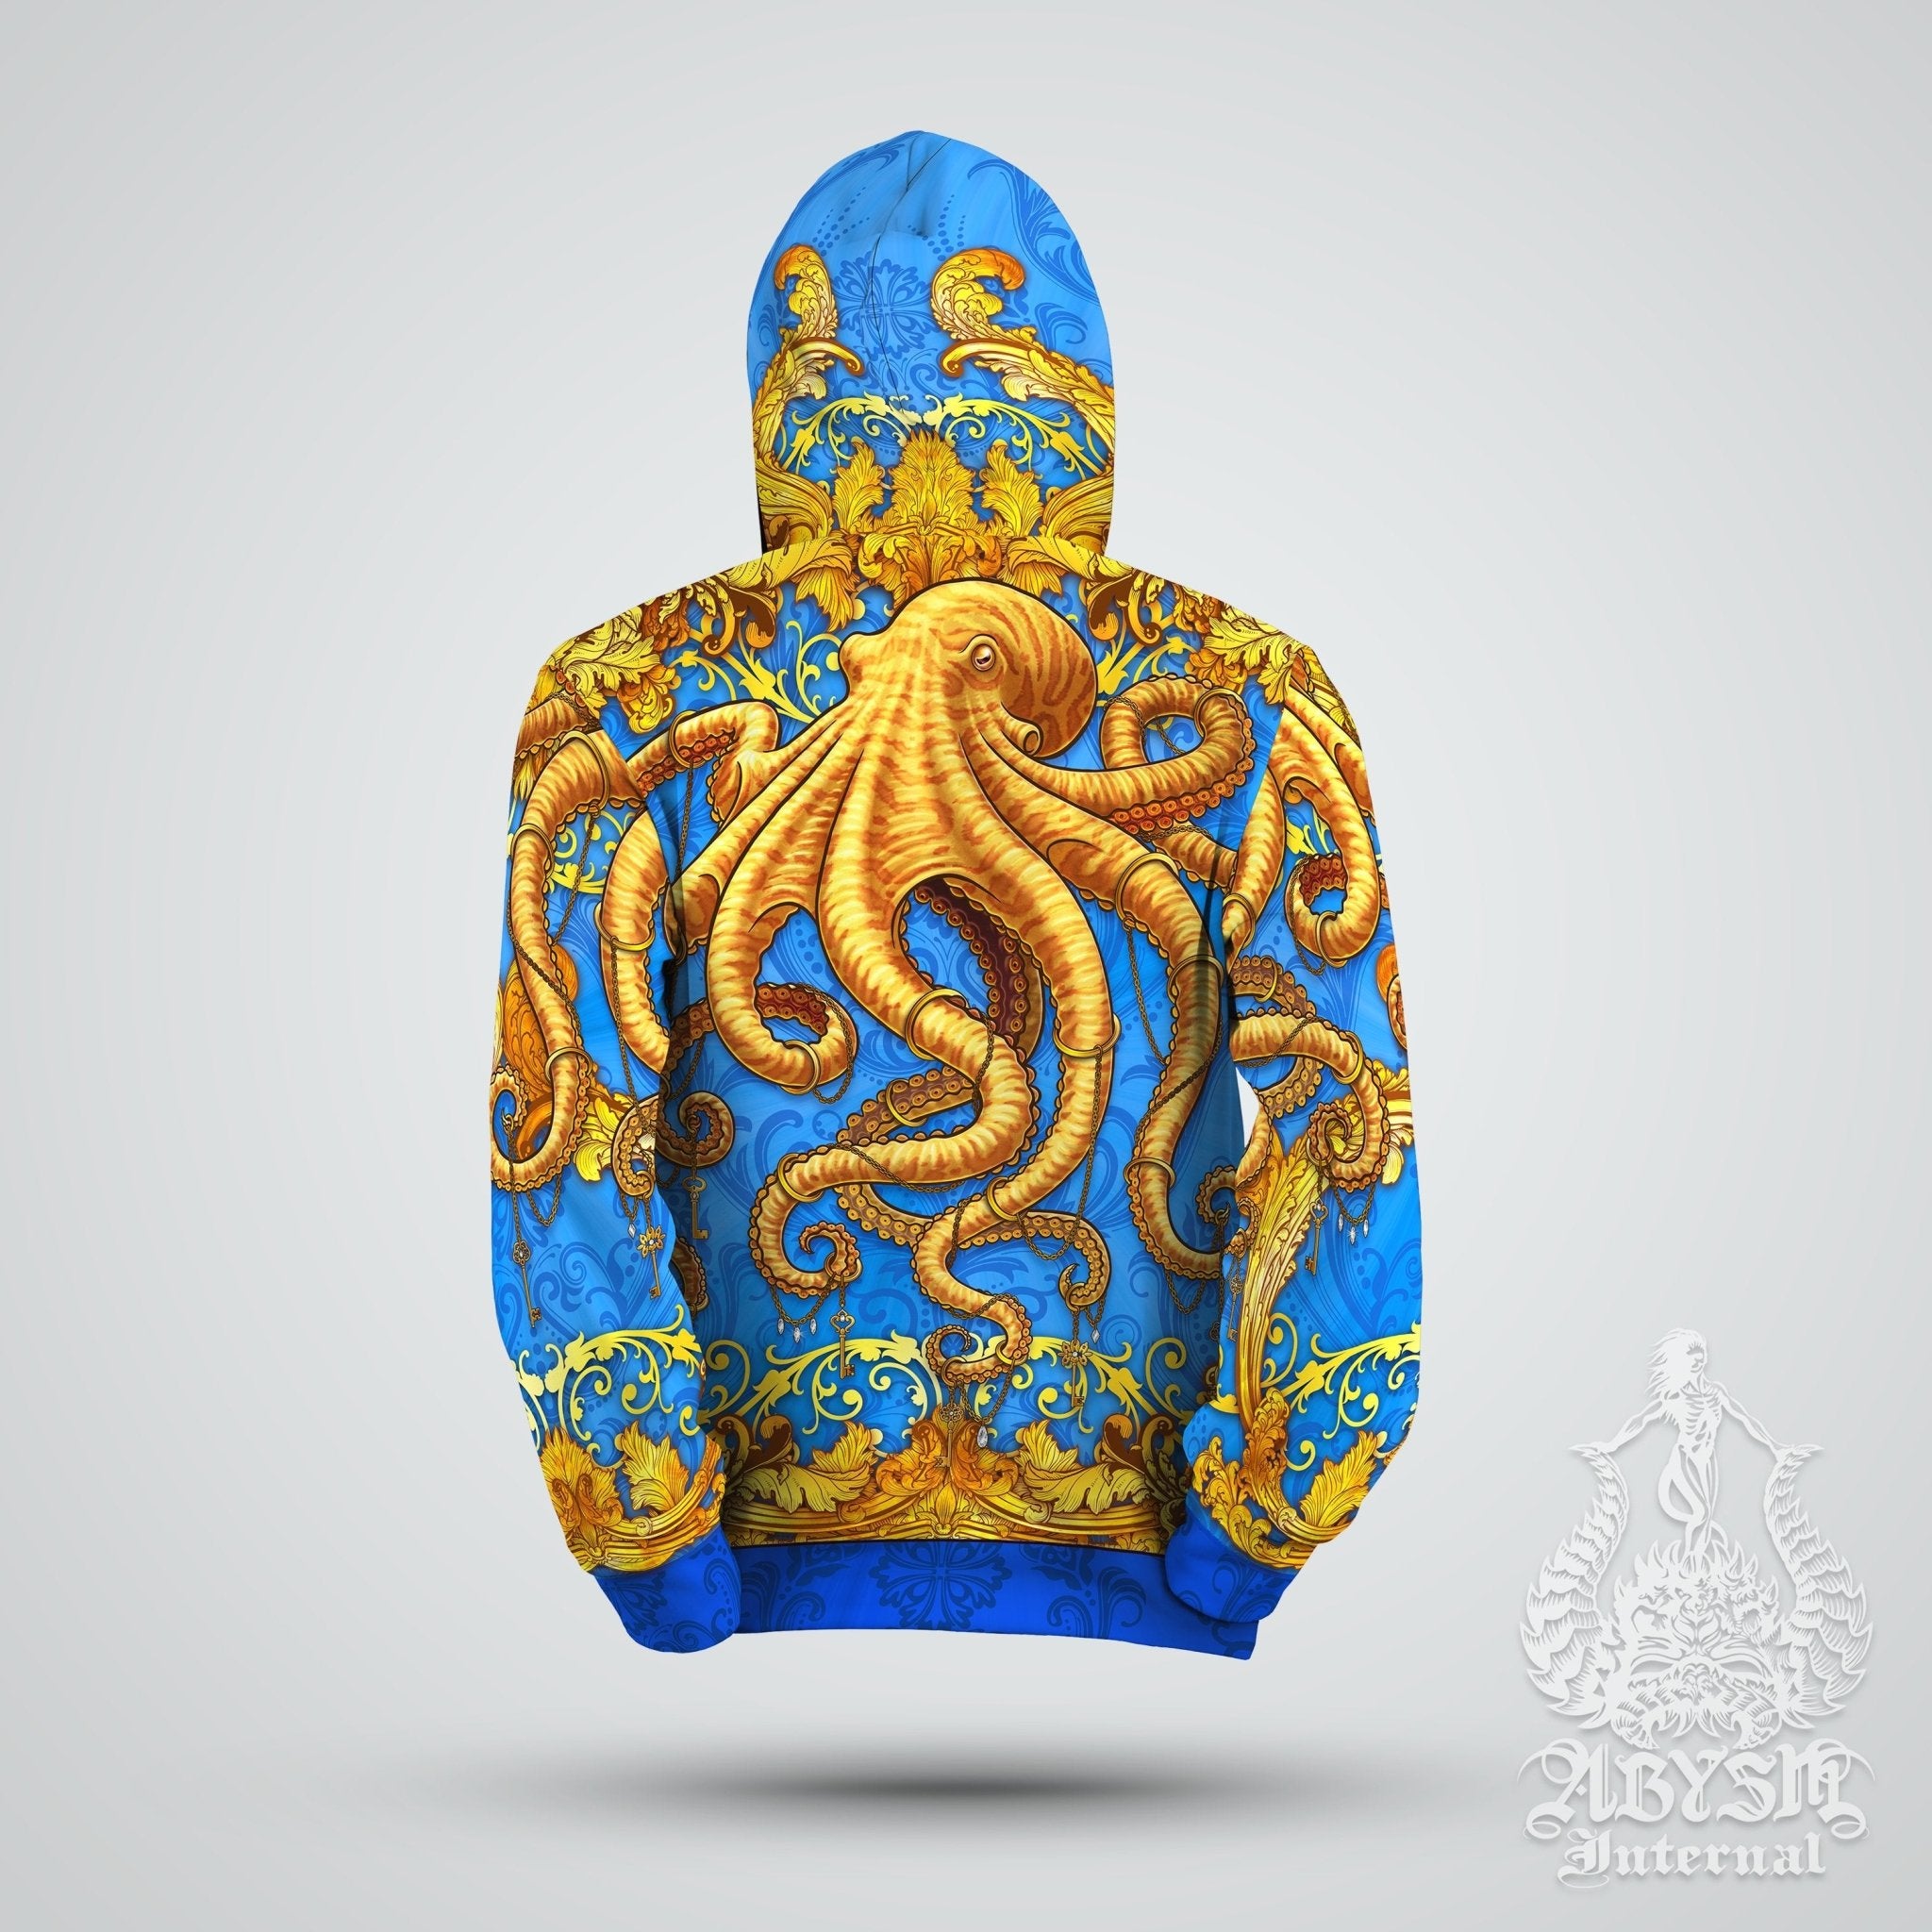 Octopus Hoodie, Street Outfit, Graffiti Streetwear, Alternative Clothing, Unisex - Cyan and Gold - Abysm Internal